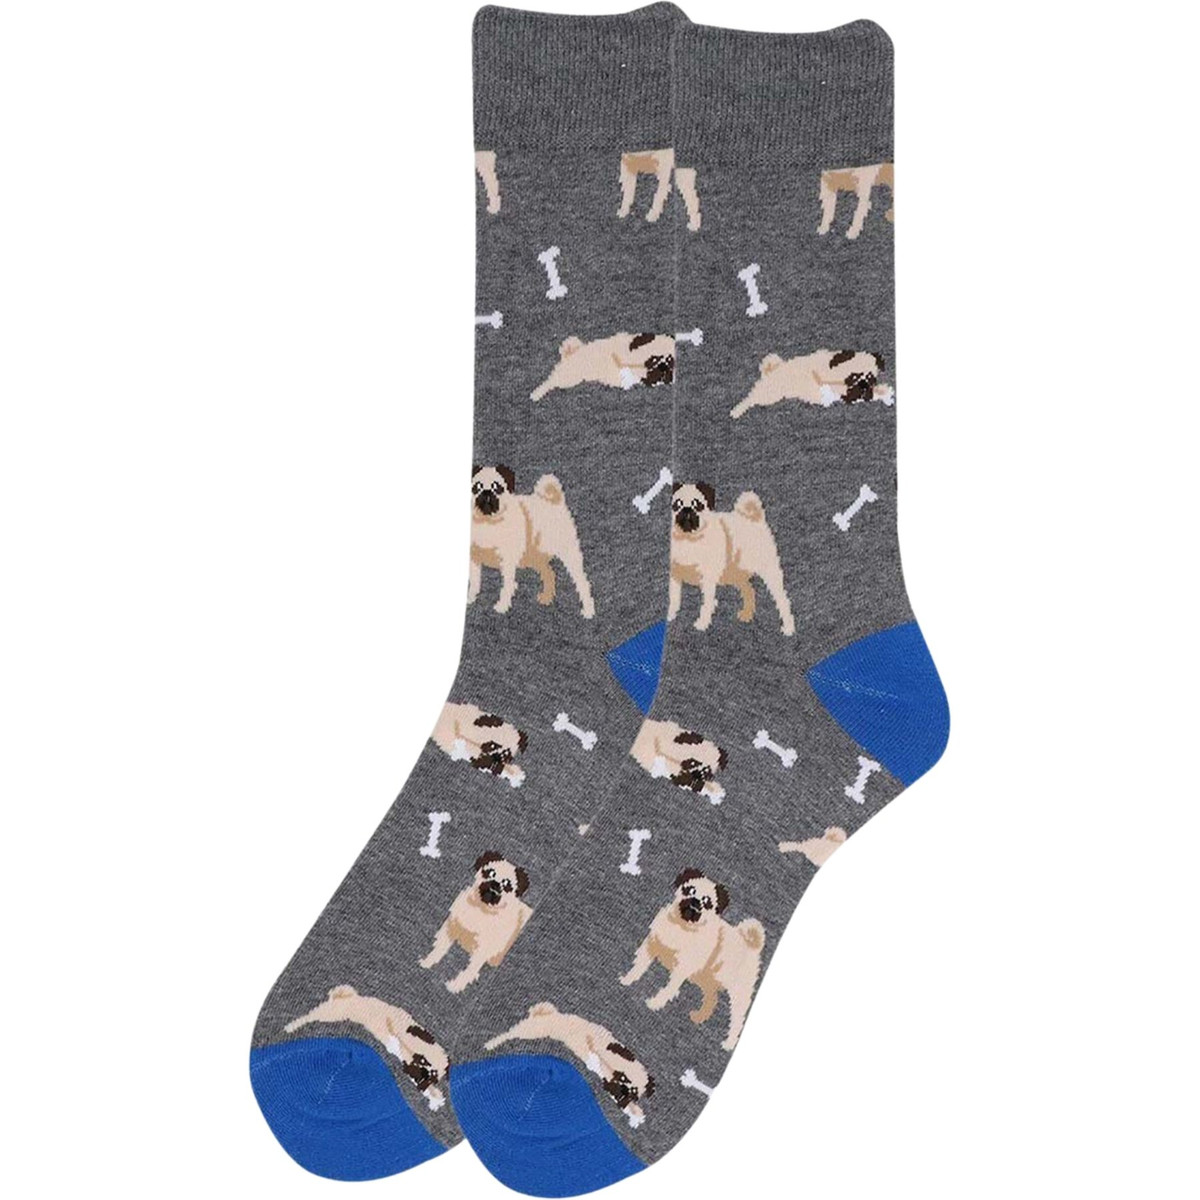 Men's Playful Pug Dogs Bones Pattern Crew Novelty Socks - Blue